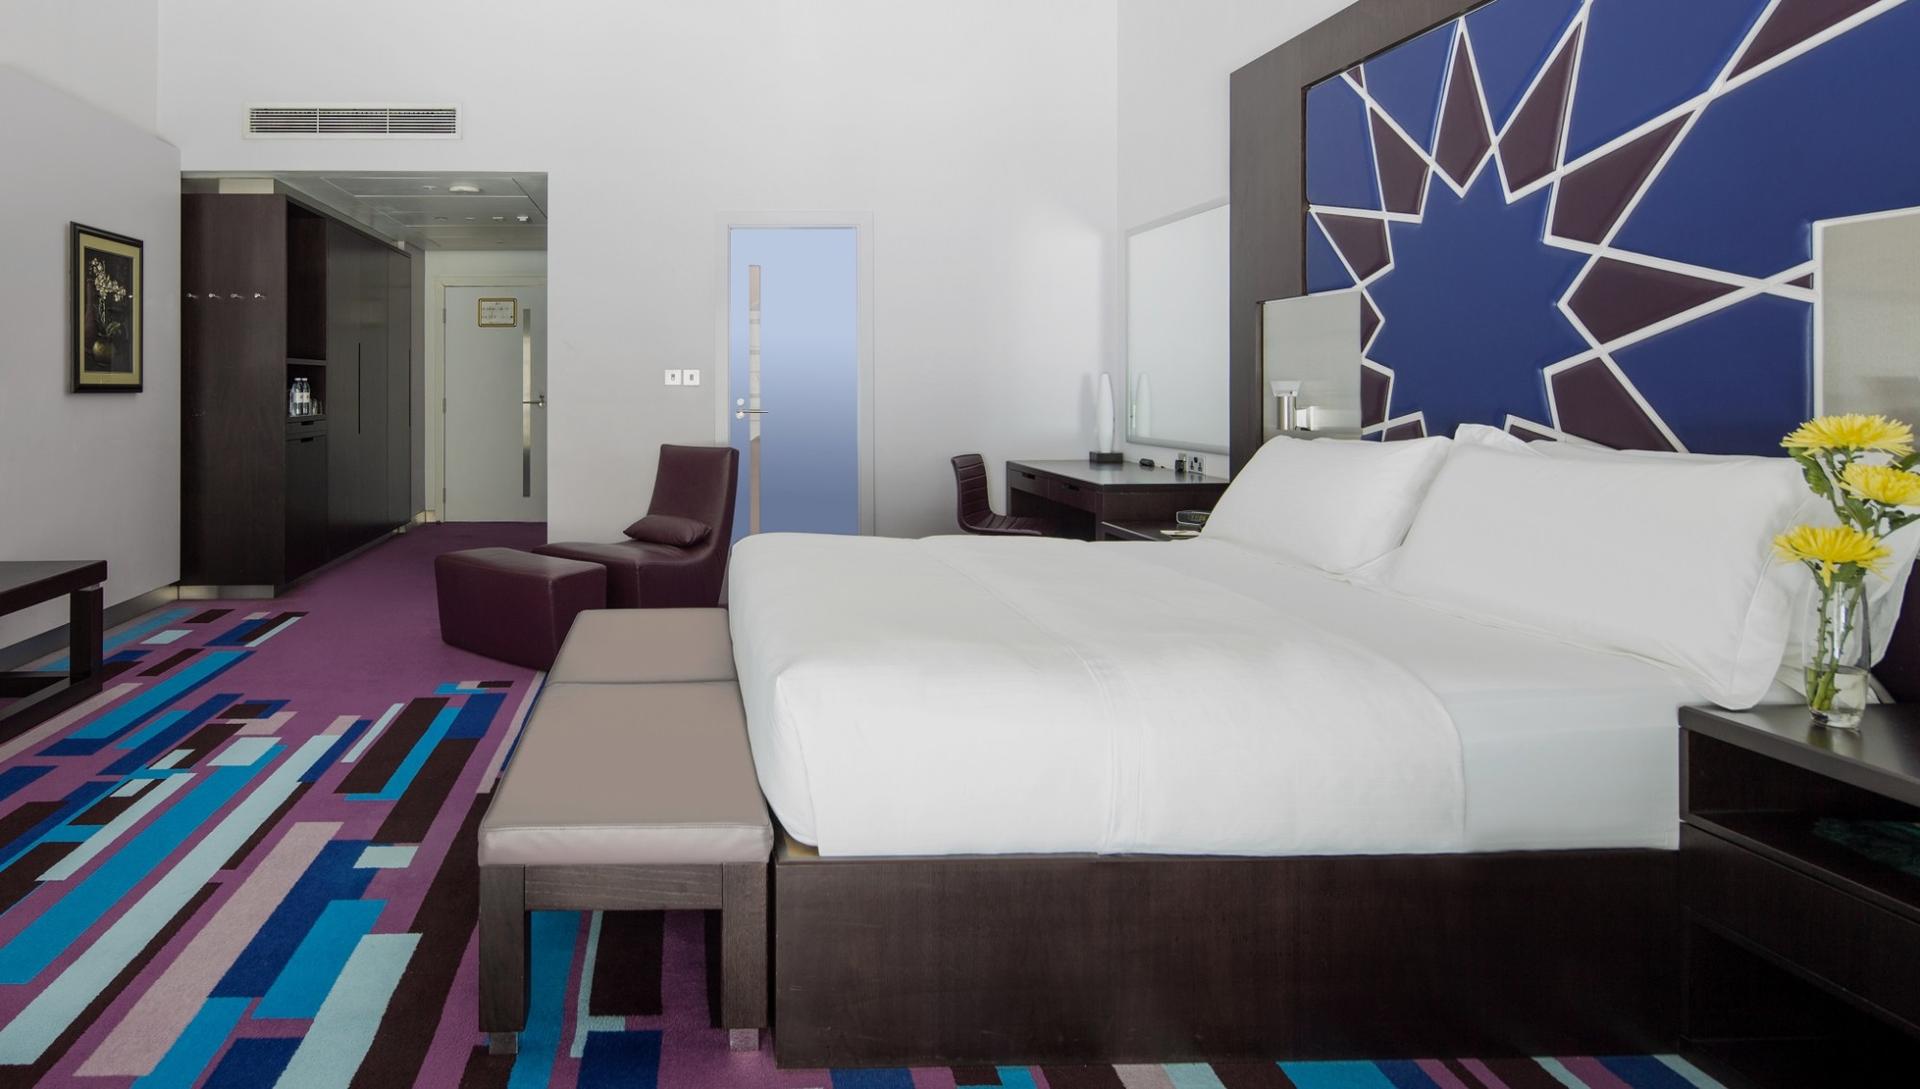 Dubai International Hotel (Concourse B) image 5 of 25